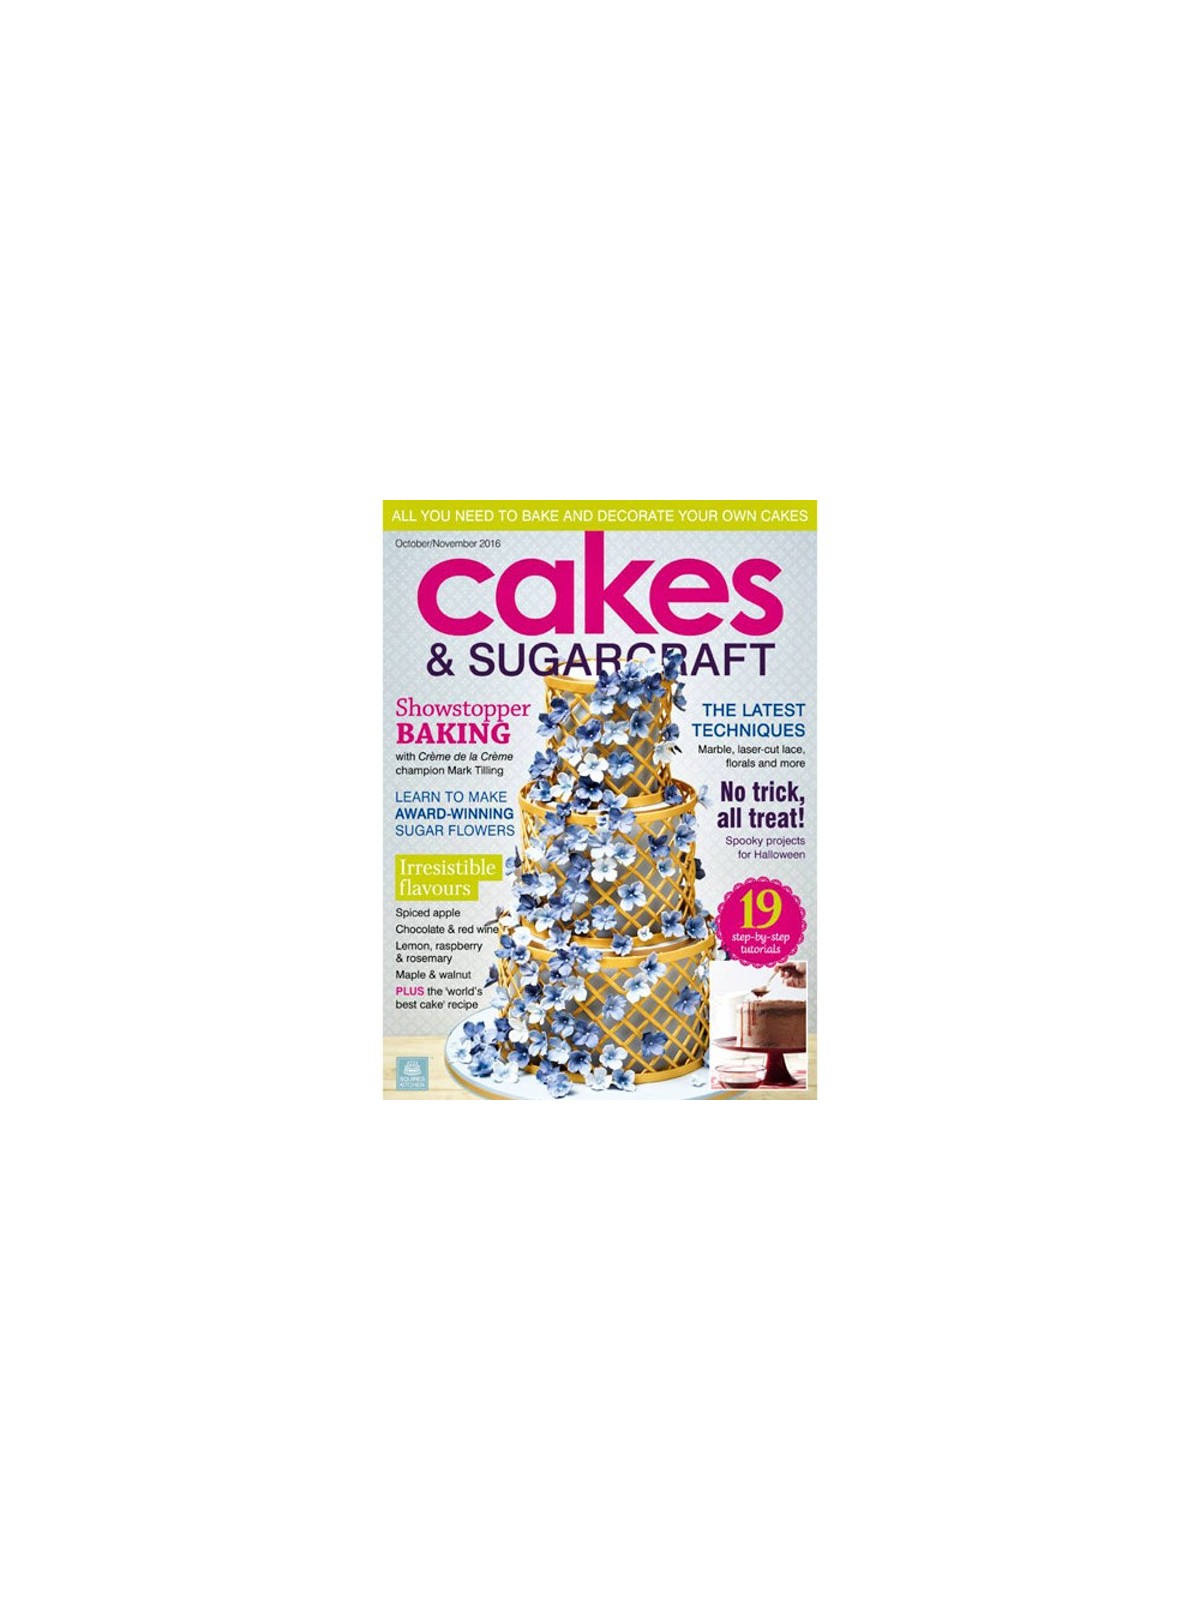 Cakes & Sugarcraft - október / november 2016